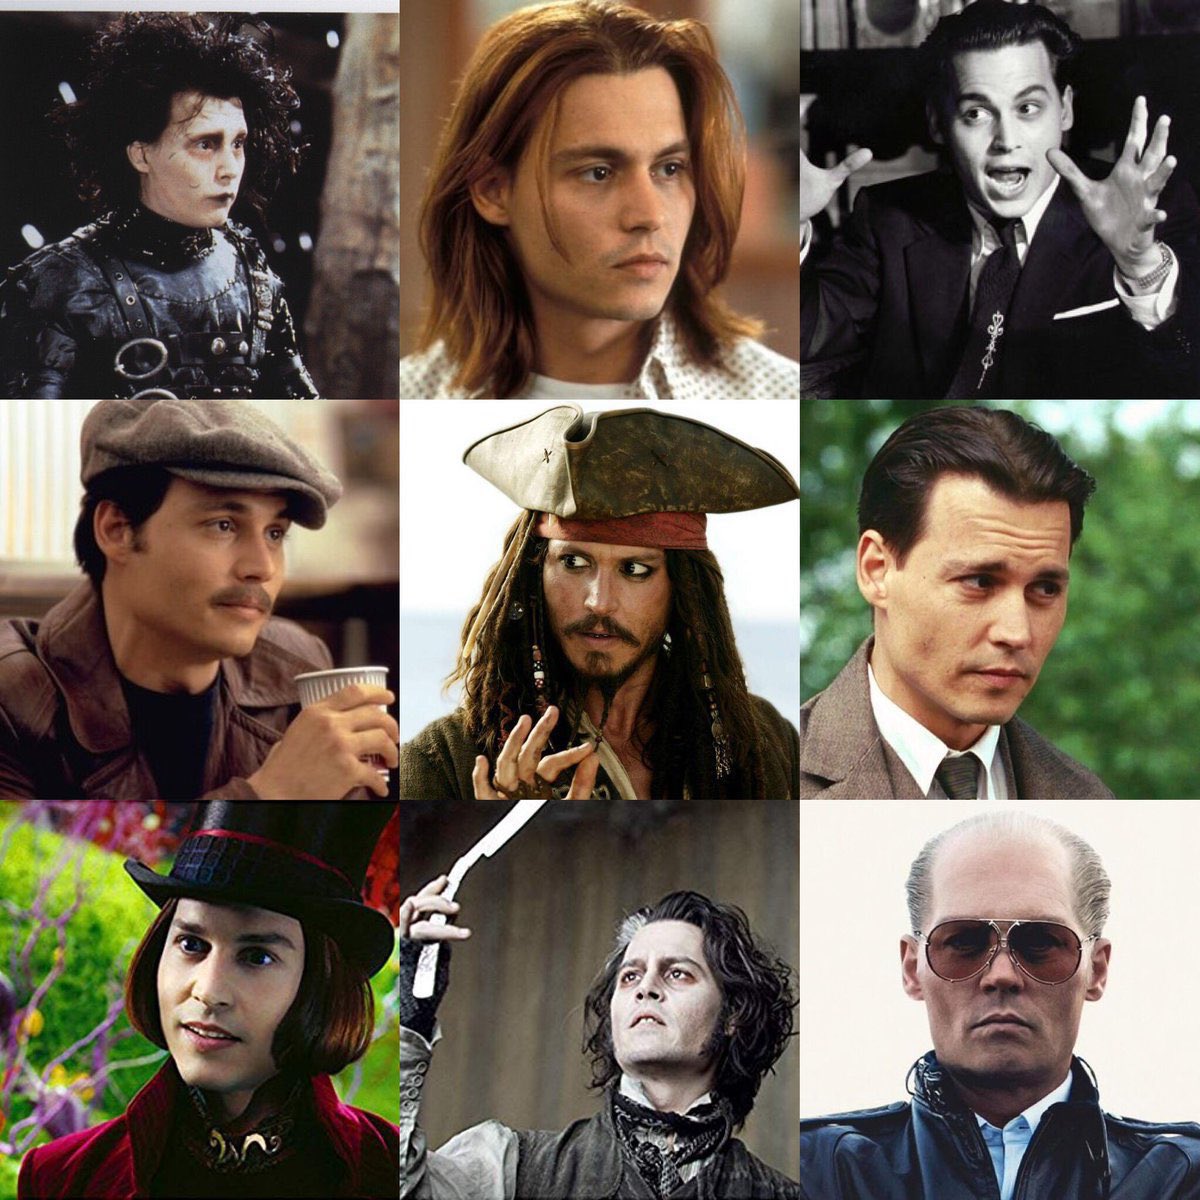 Everyone say Happy Birthday to the KING OF RANGE AND CINEMA Johnny Depp!  